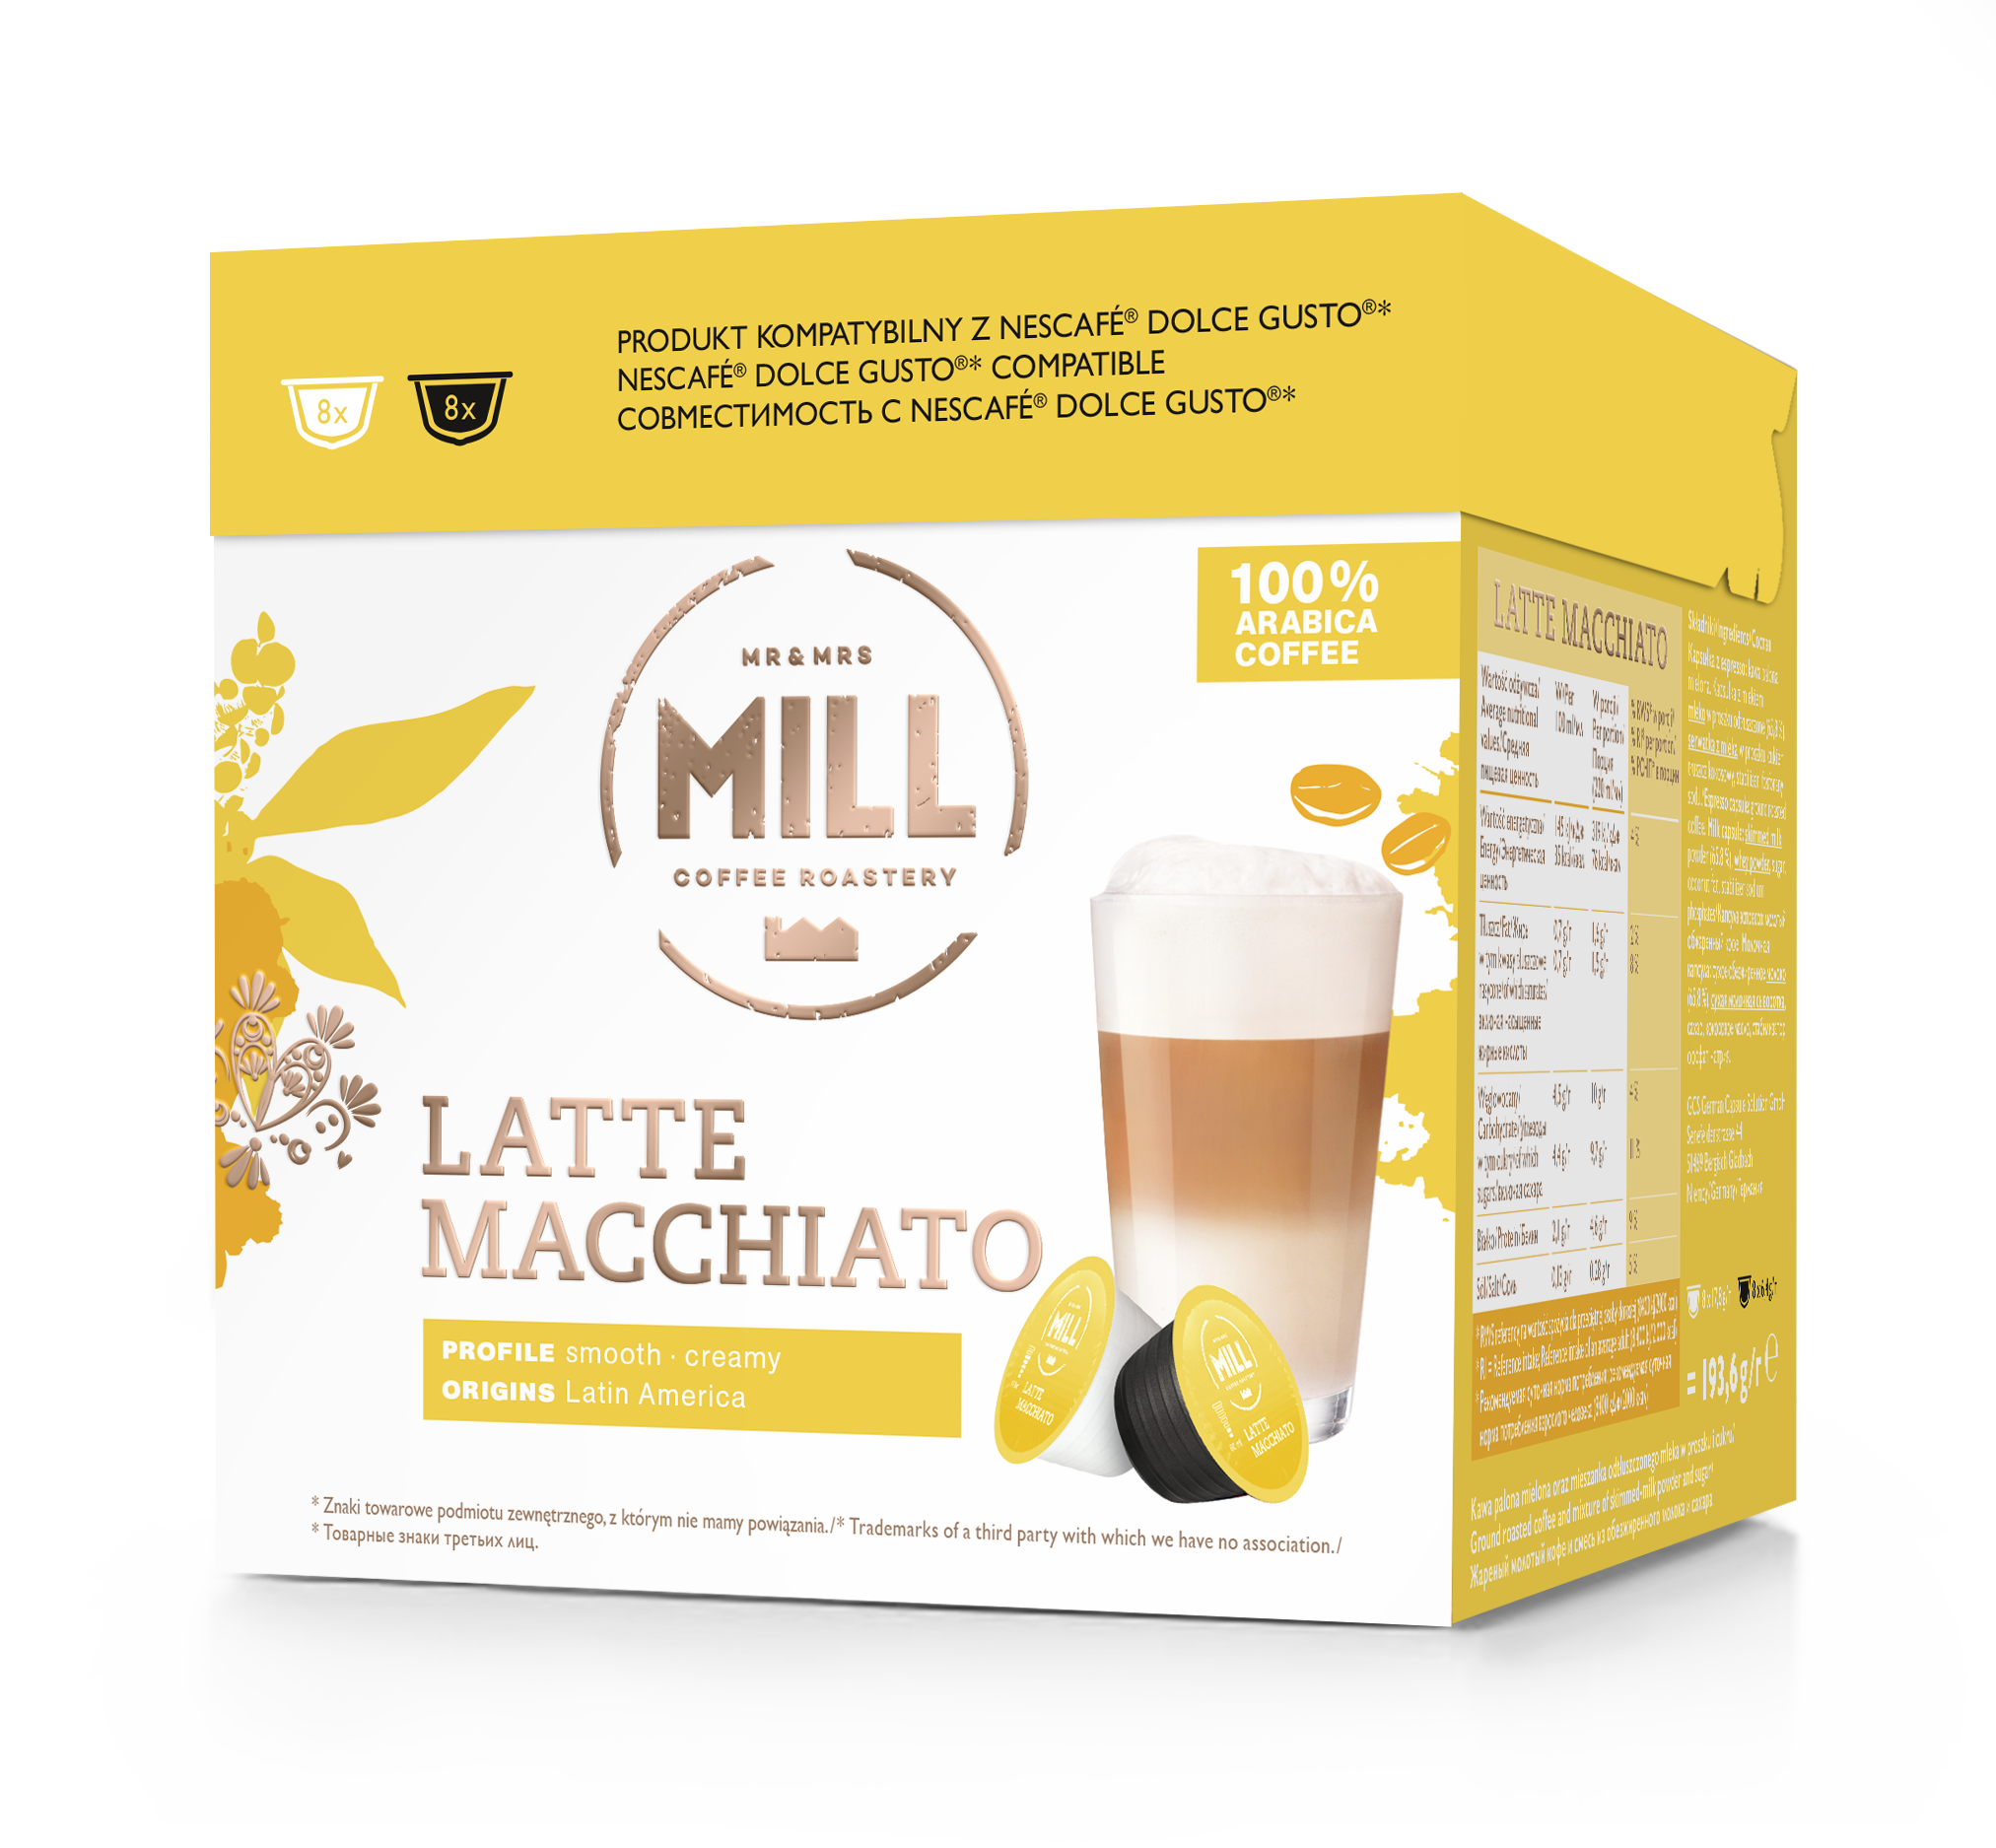 Mr&Mrs Mill Latte Macchiato Kaffeekapseln, kompatibel mit Dolce Gusto